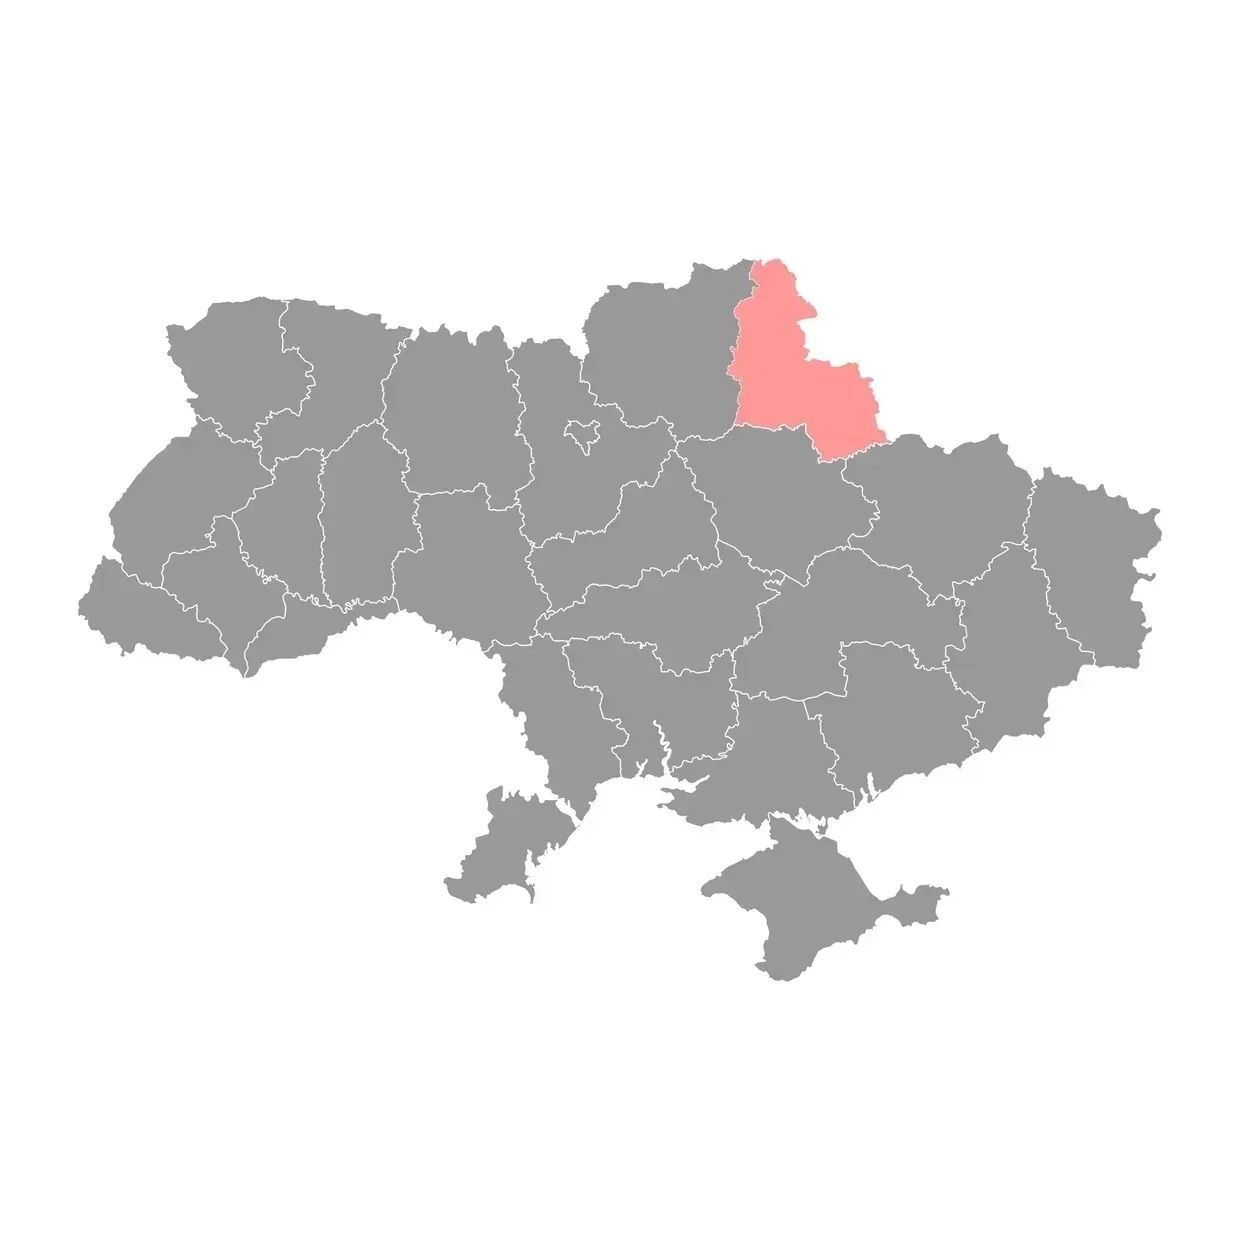 Russia attacks 12 border communities in Sumy Oblast